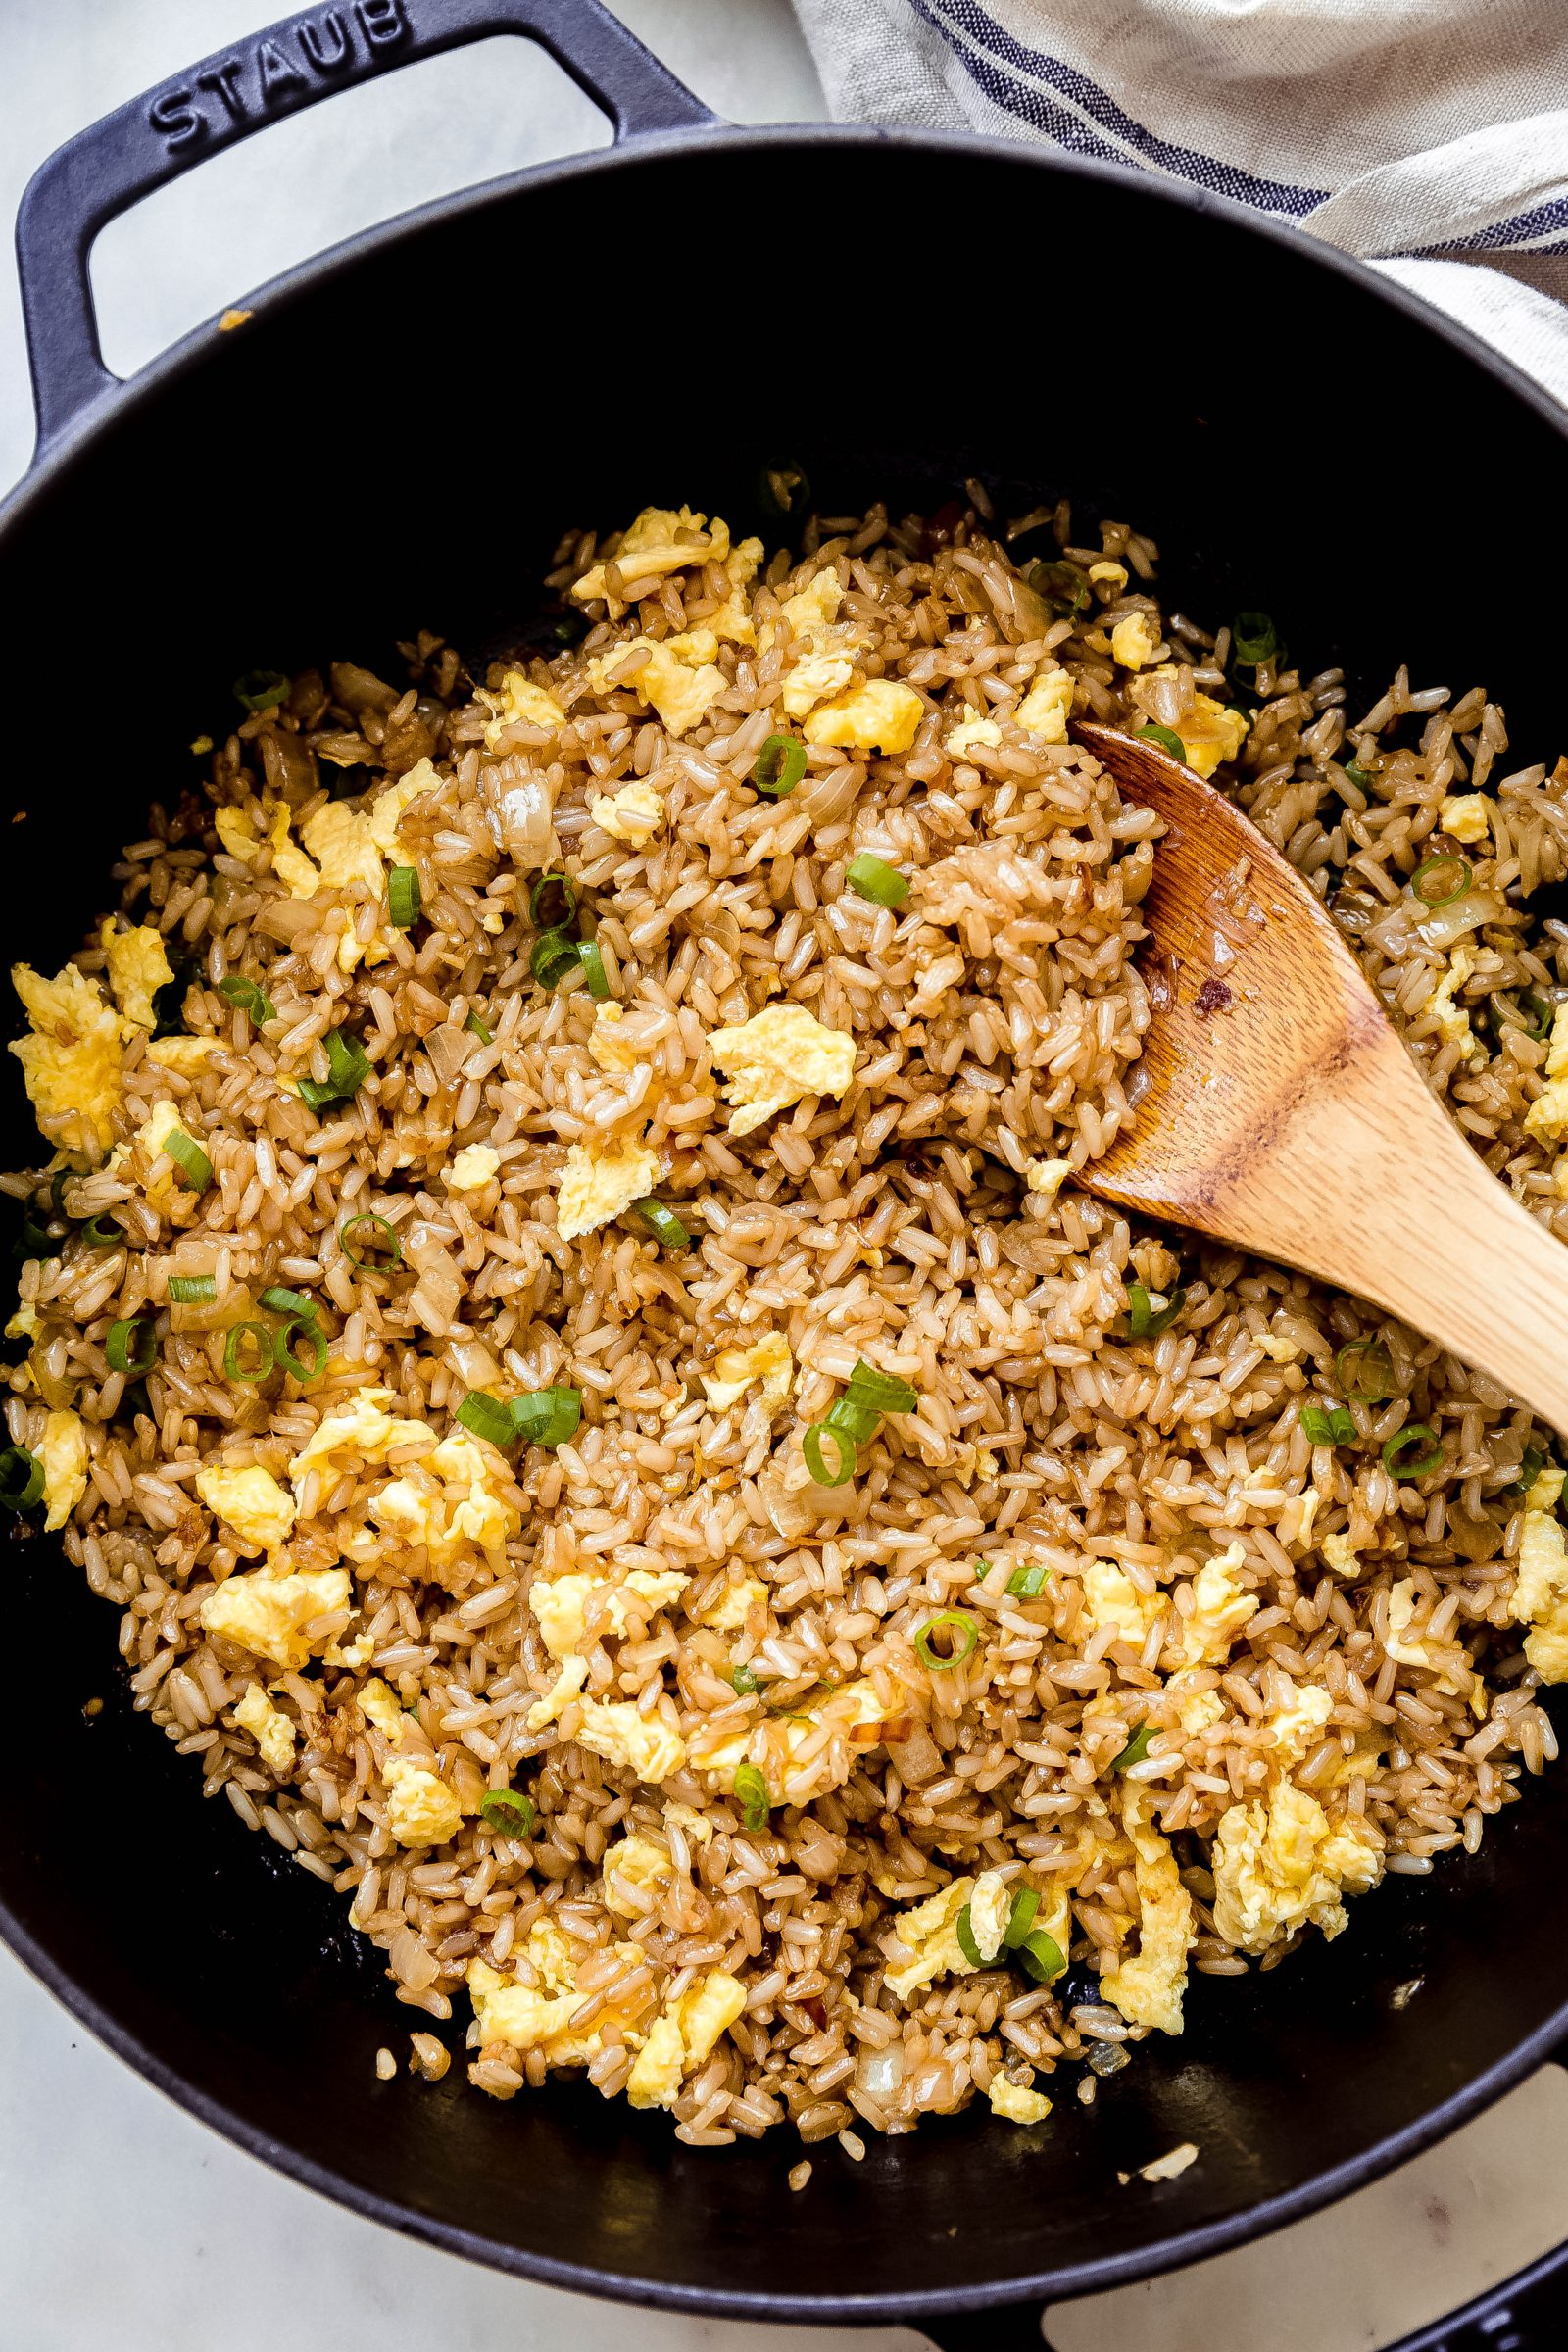 How to Make Rice - Nut Free Wok